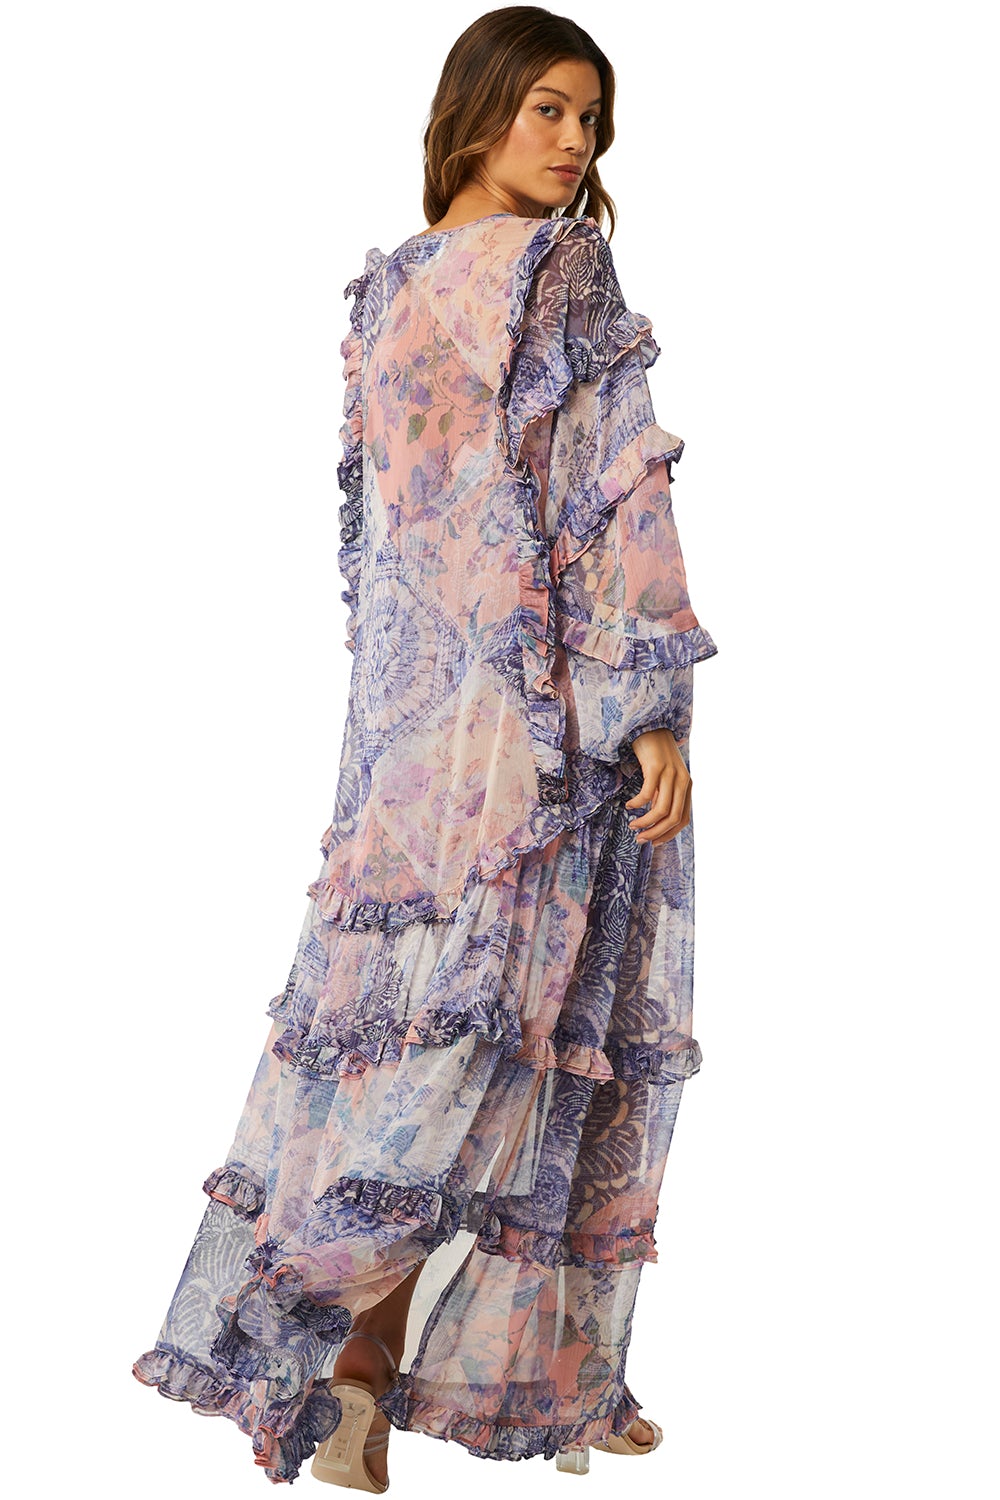 Misa - Persephone Dress in Namaskar Patchwork